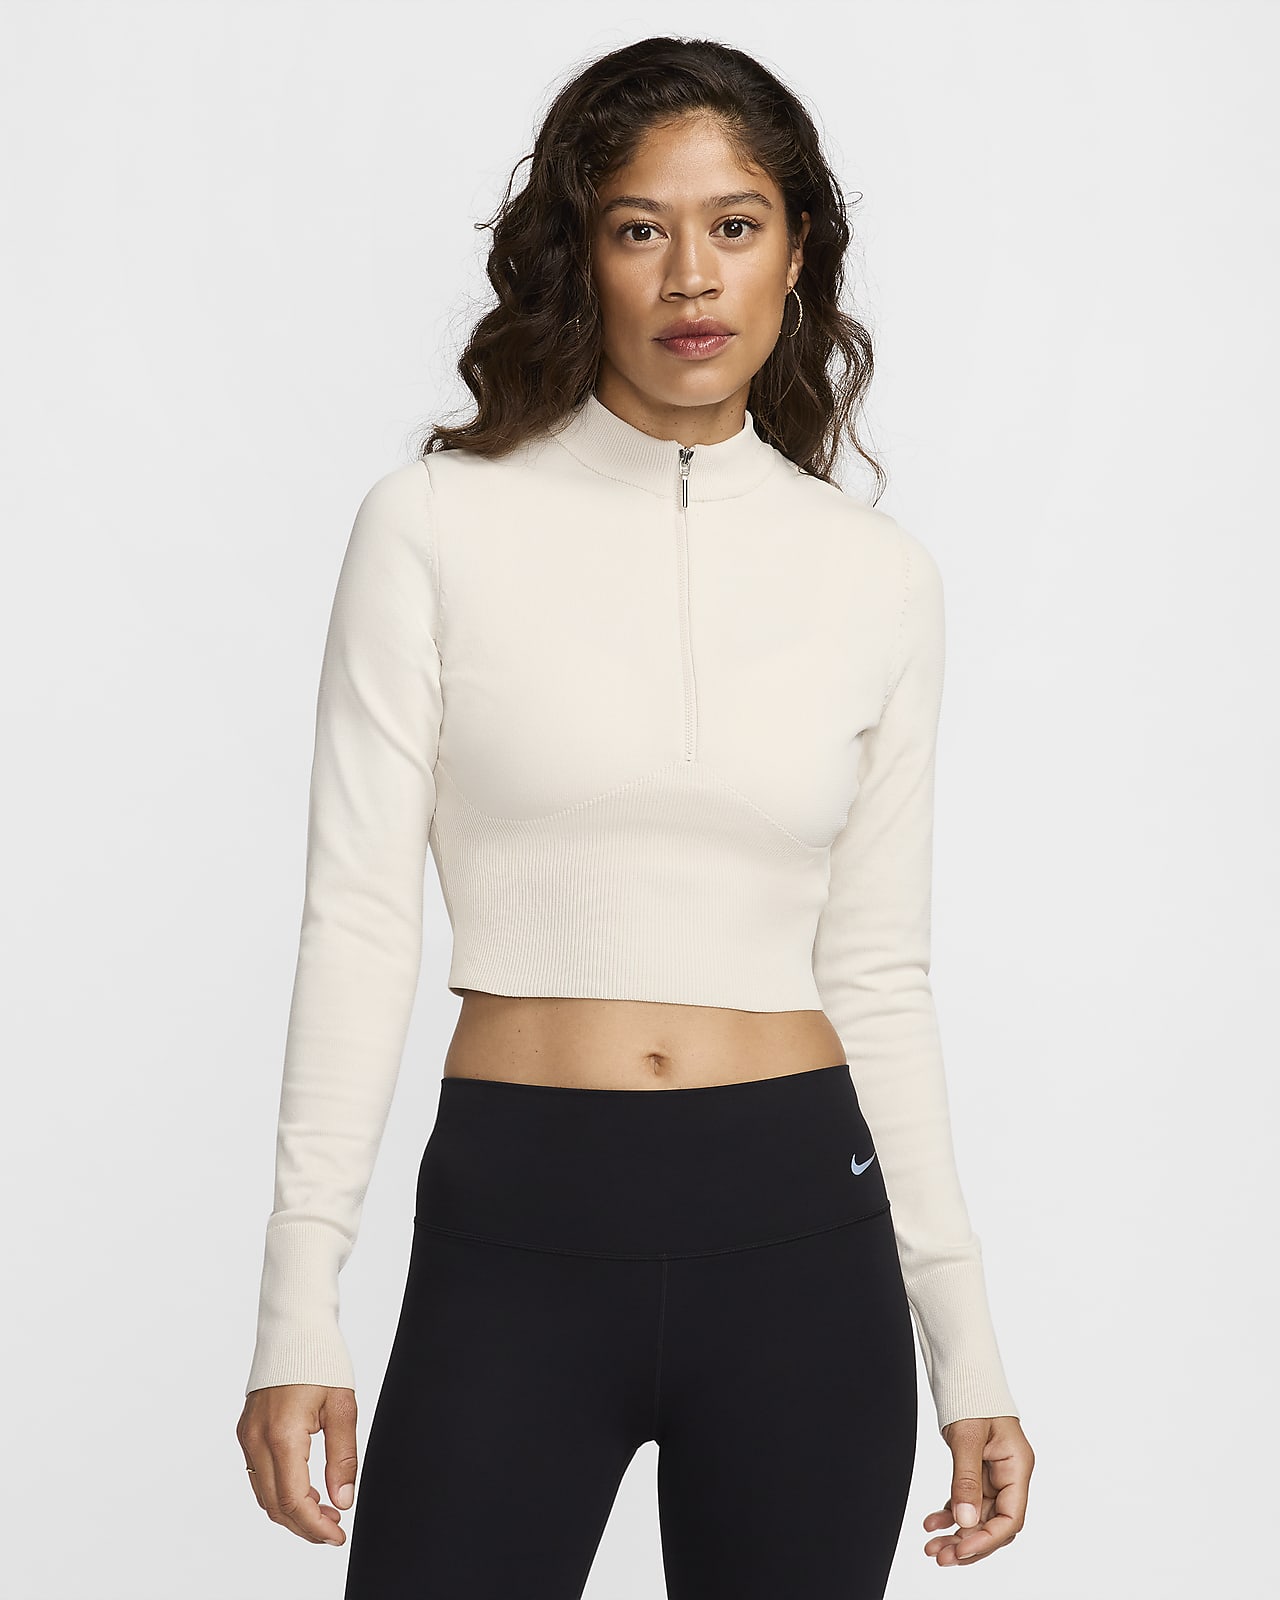 Nike Sportswear Chill Knit Jersey corto de manga larga y ajuste entallado con media cremallera - Mujer